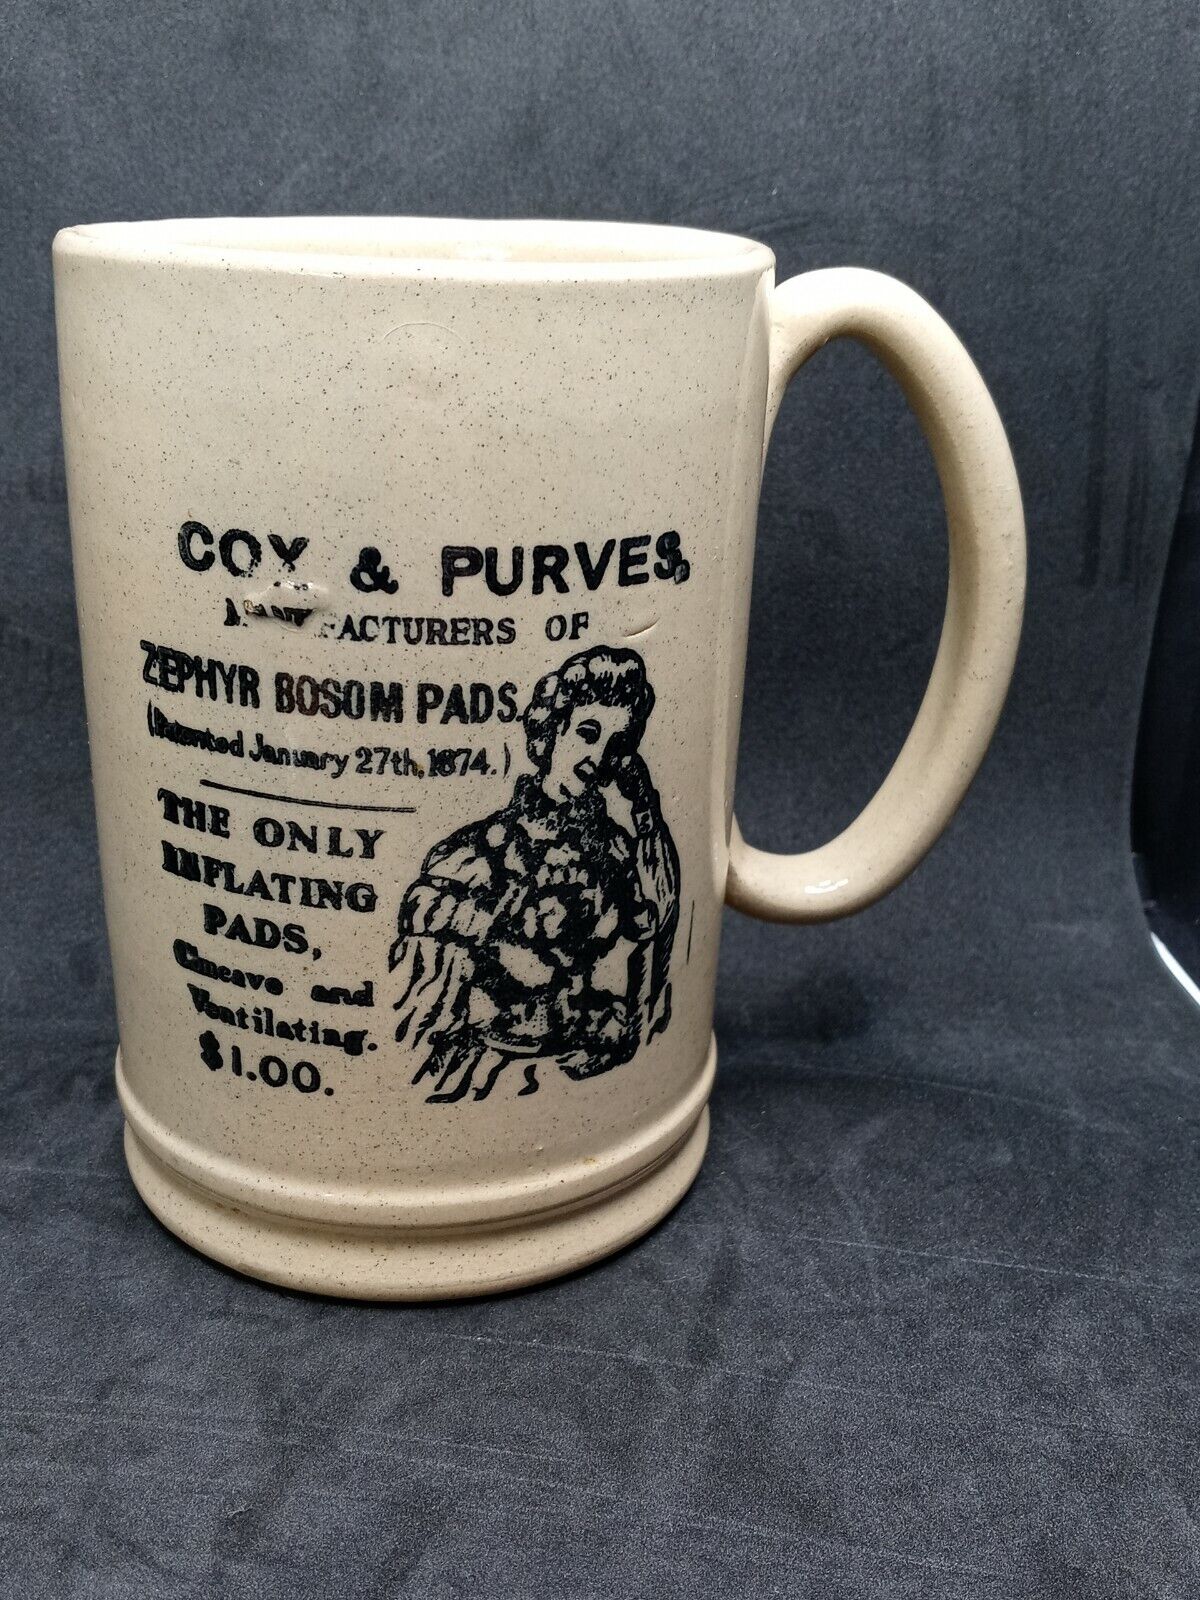 COX & PURVES Zephyr Bosom Pads Breast Enhancement Advertising Stoneware Cup Mug